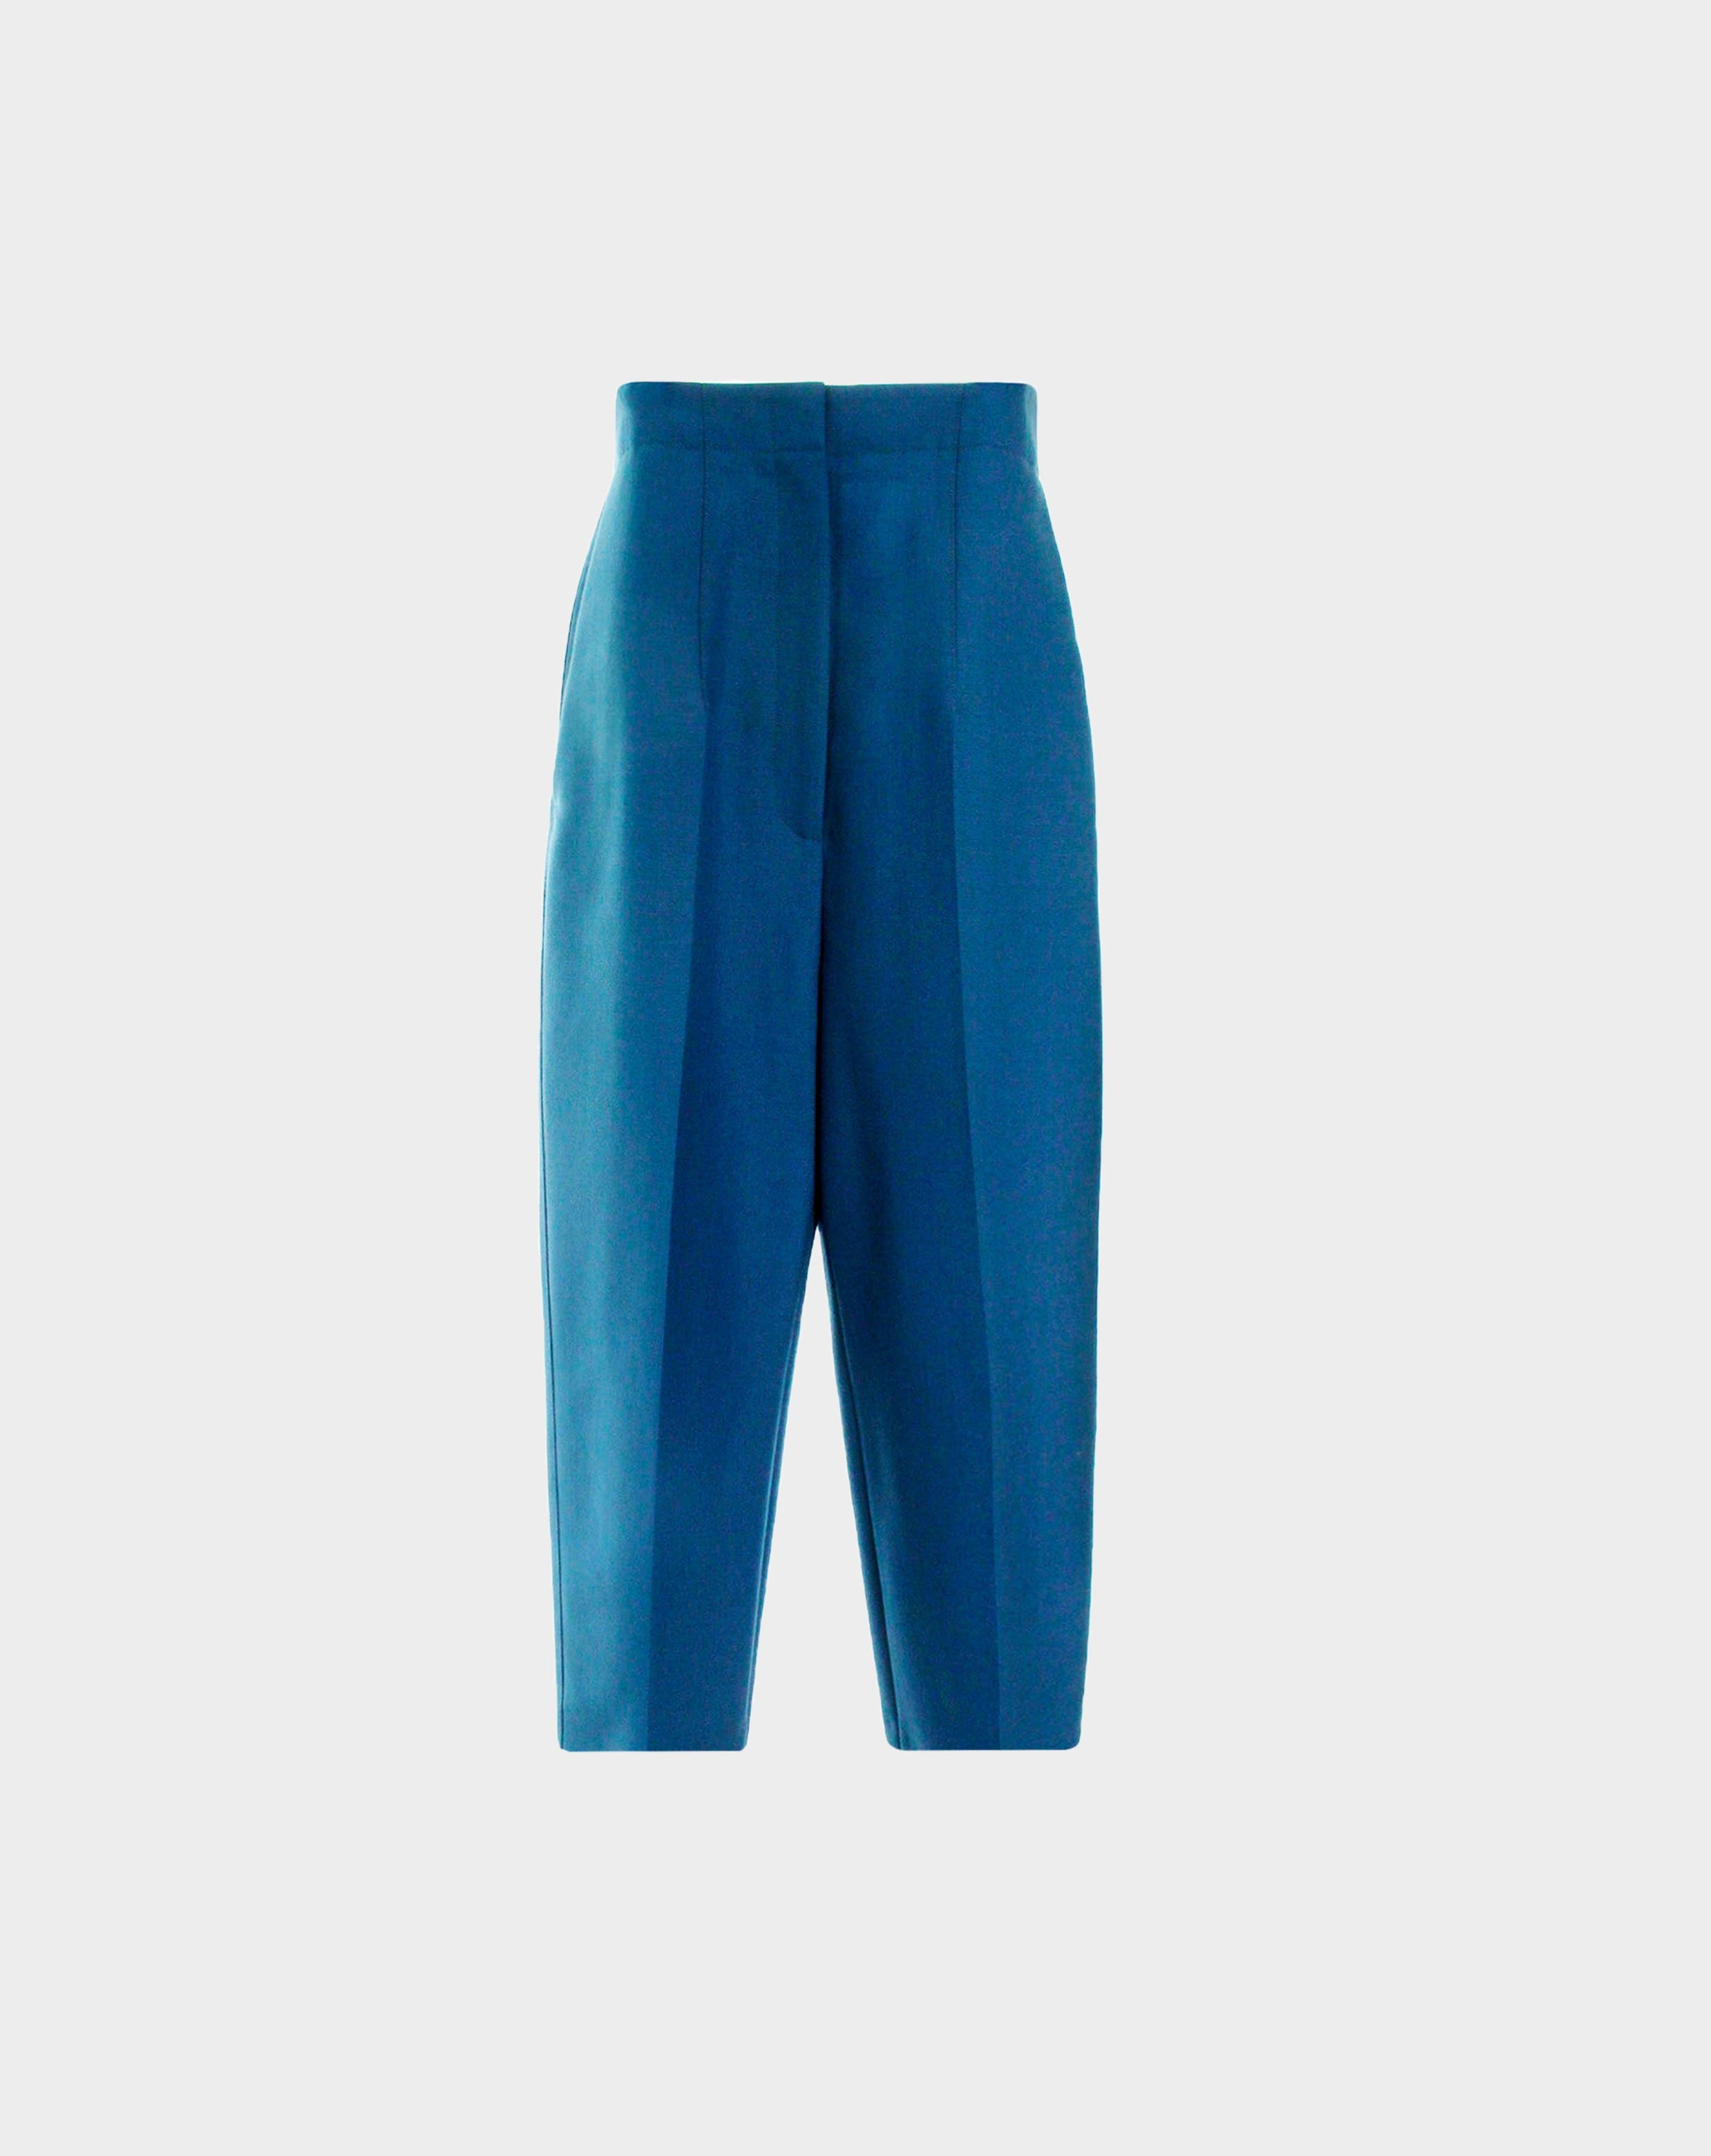 Céline by Phoebe Philo 2010s Blue Pleated Trousers